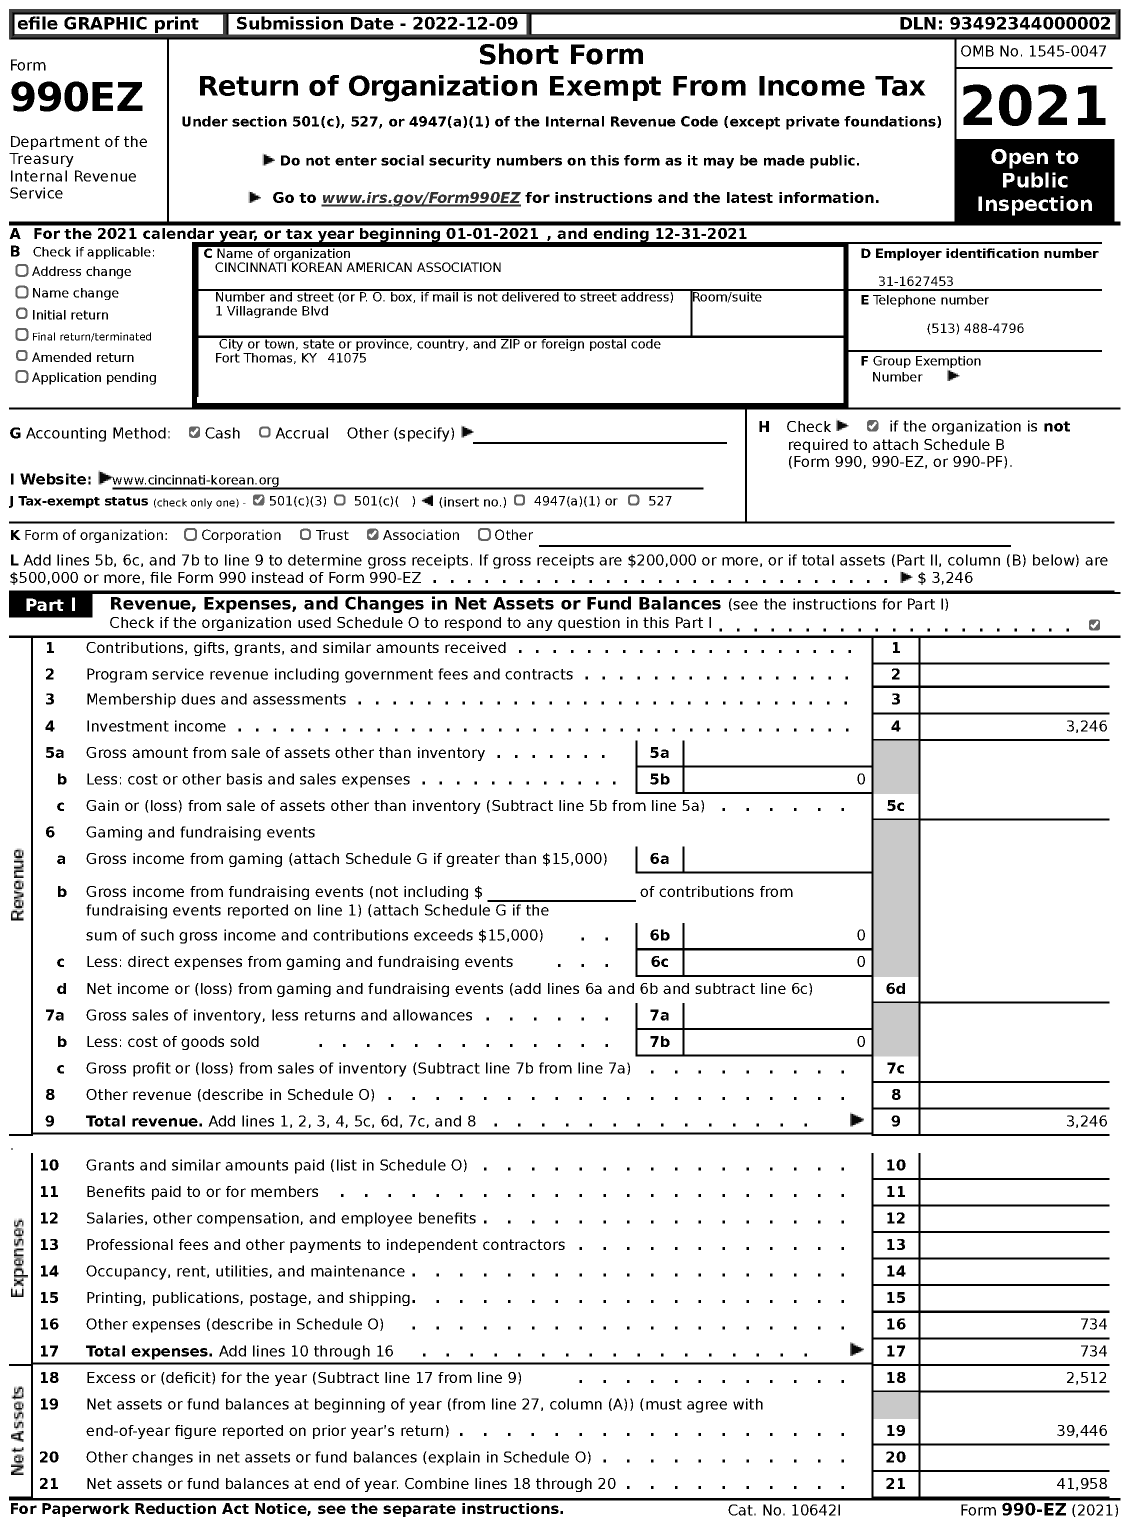 Image of first page of 2021 Form 990EZ for Cincinnati Korean American Association